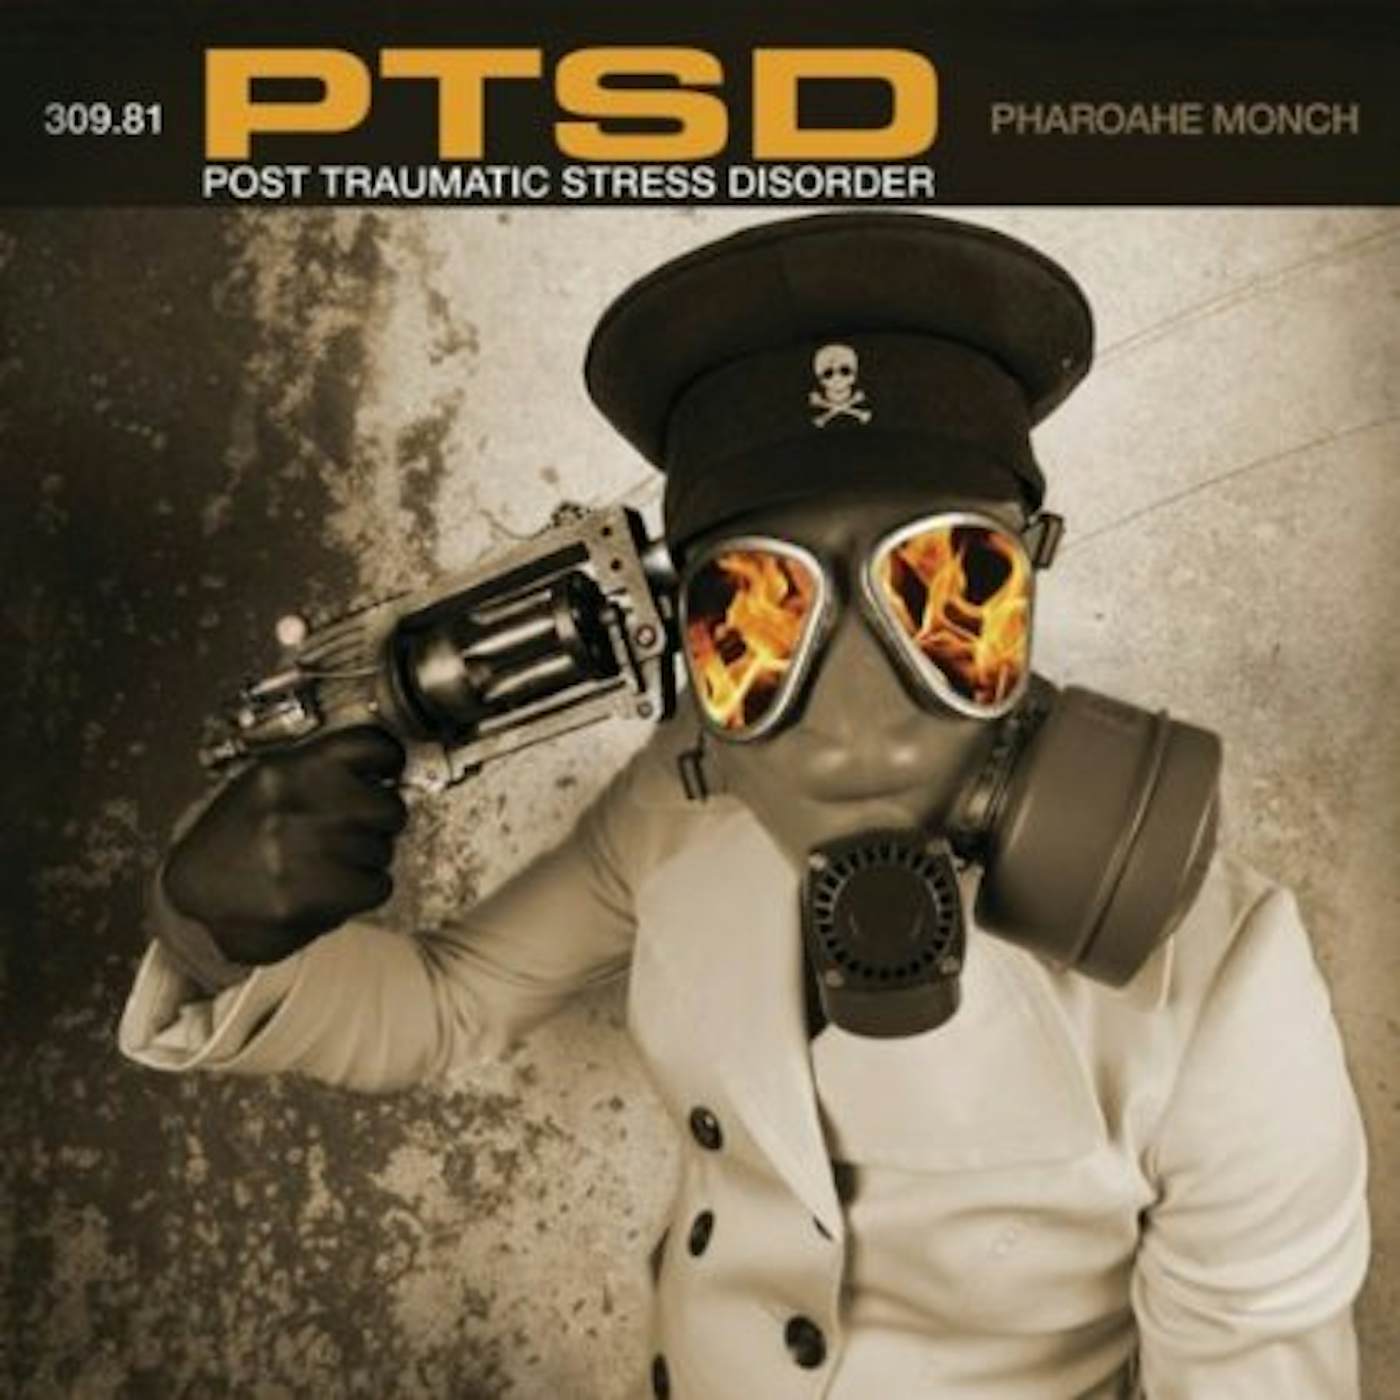 Pharoahe Monch PTSD - POST TRAUMATIC STRESS DISORDER CD